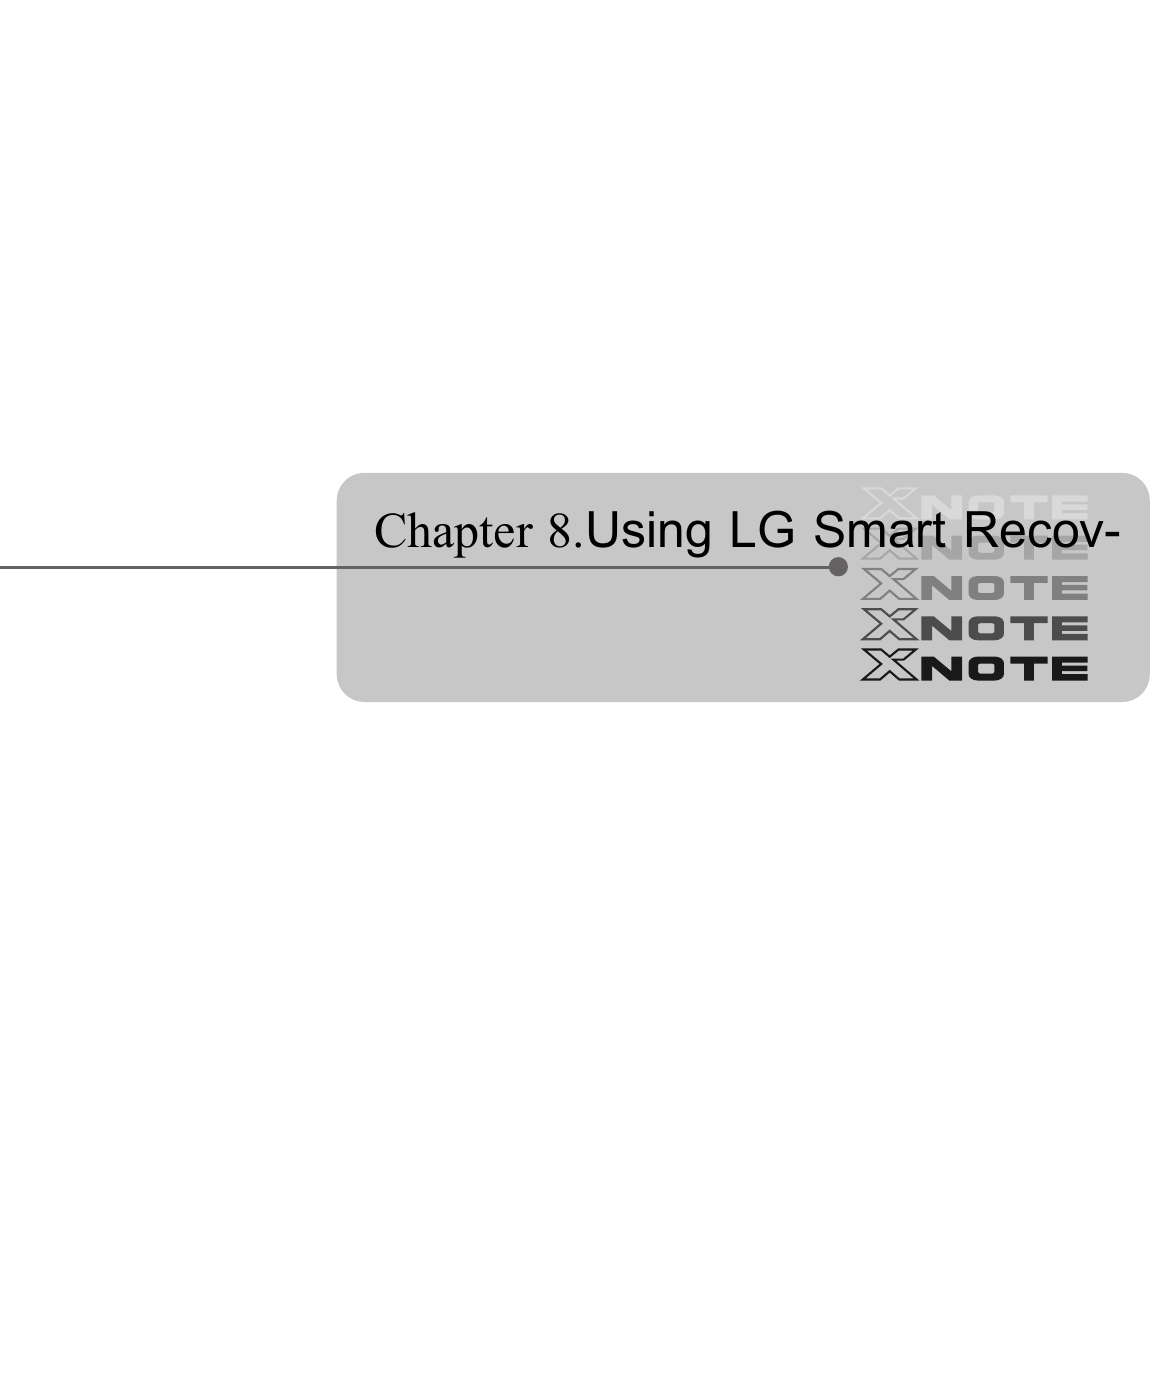  Chapter 8.Using LG Smart Recov-